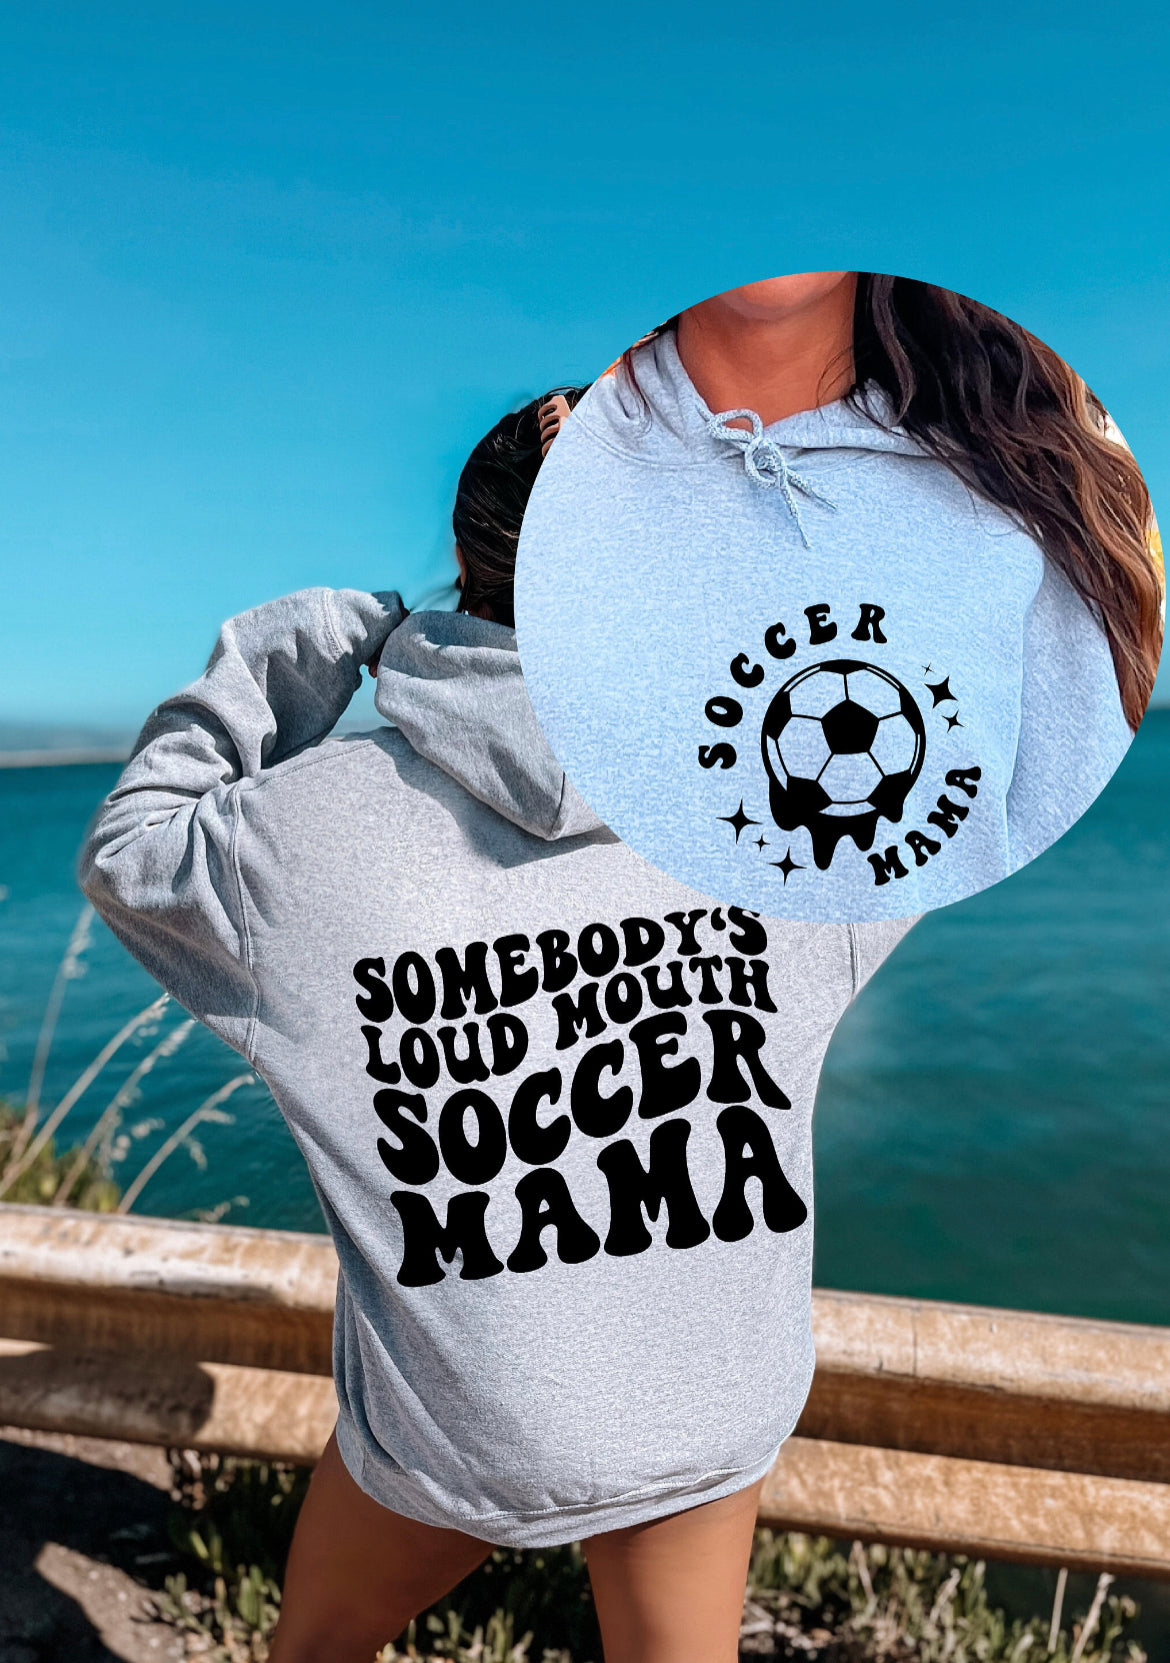 Soccer Mama t-shirt